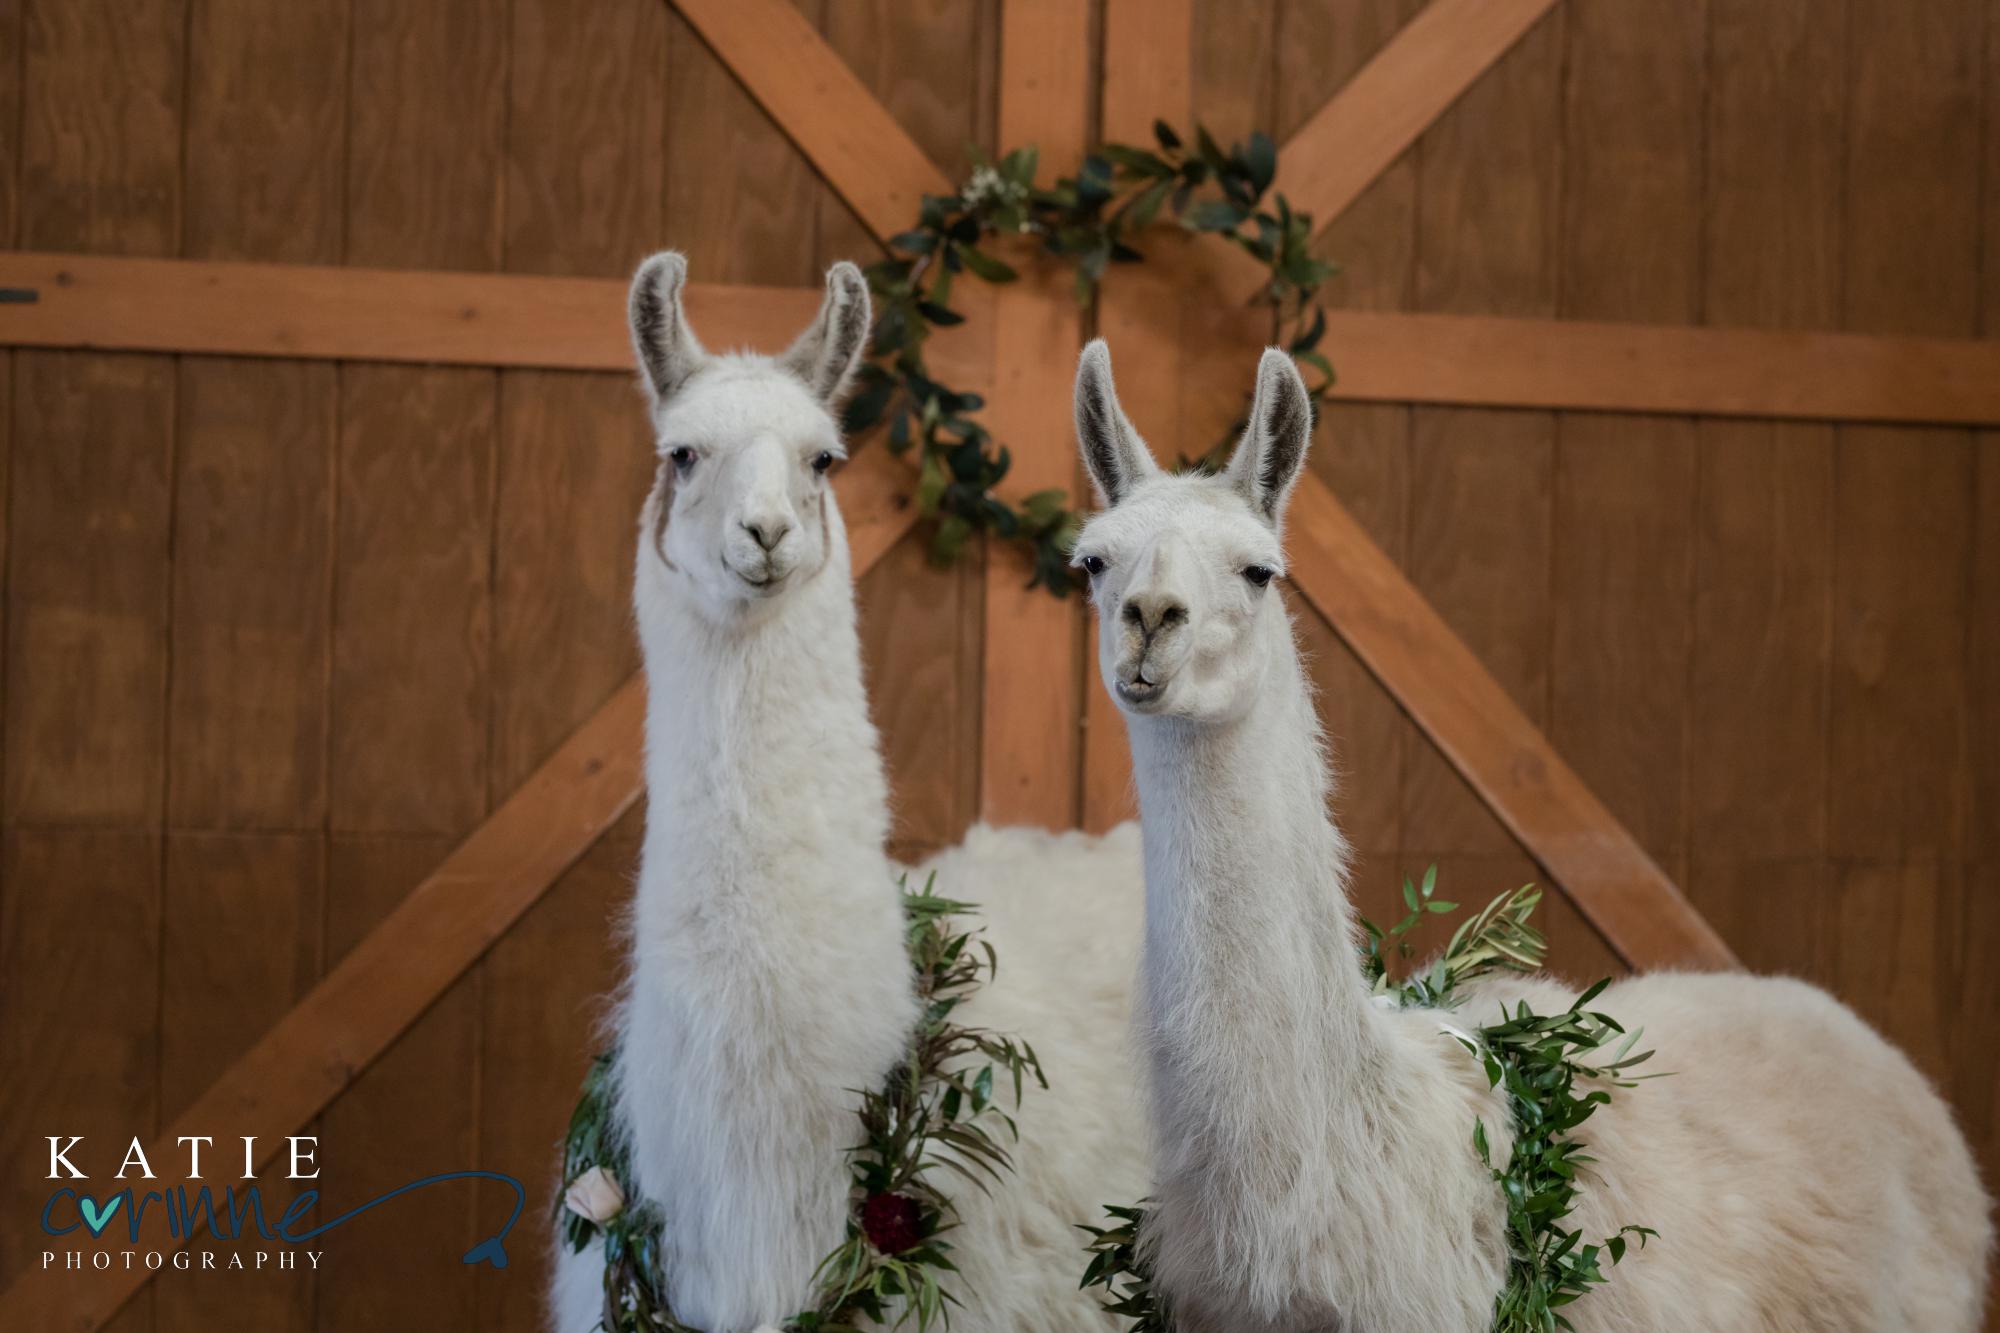 Two llamas wearing floral wreaths